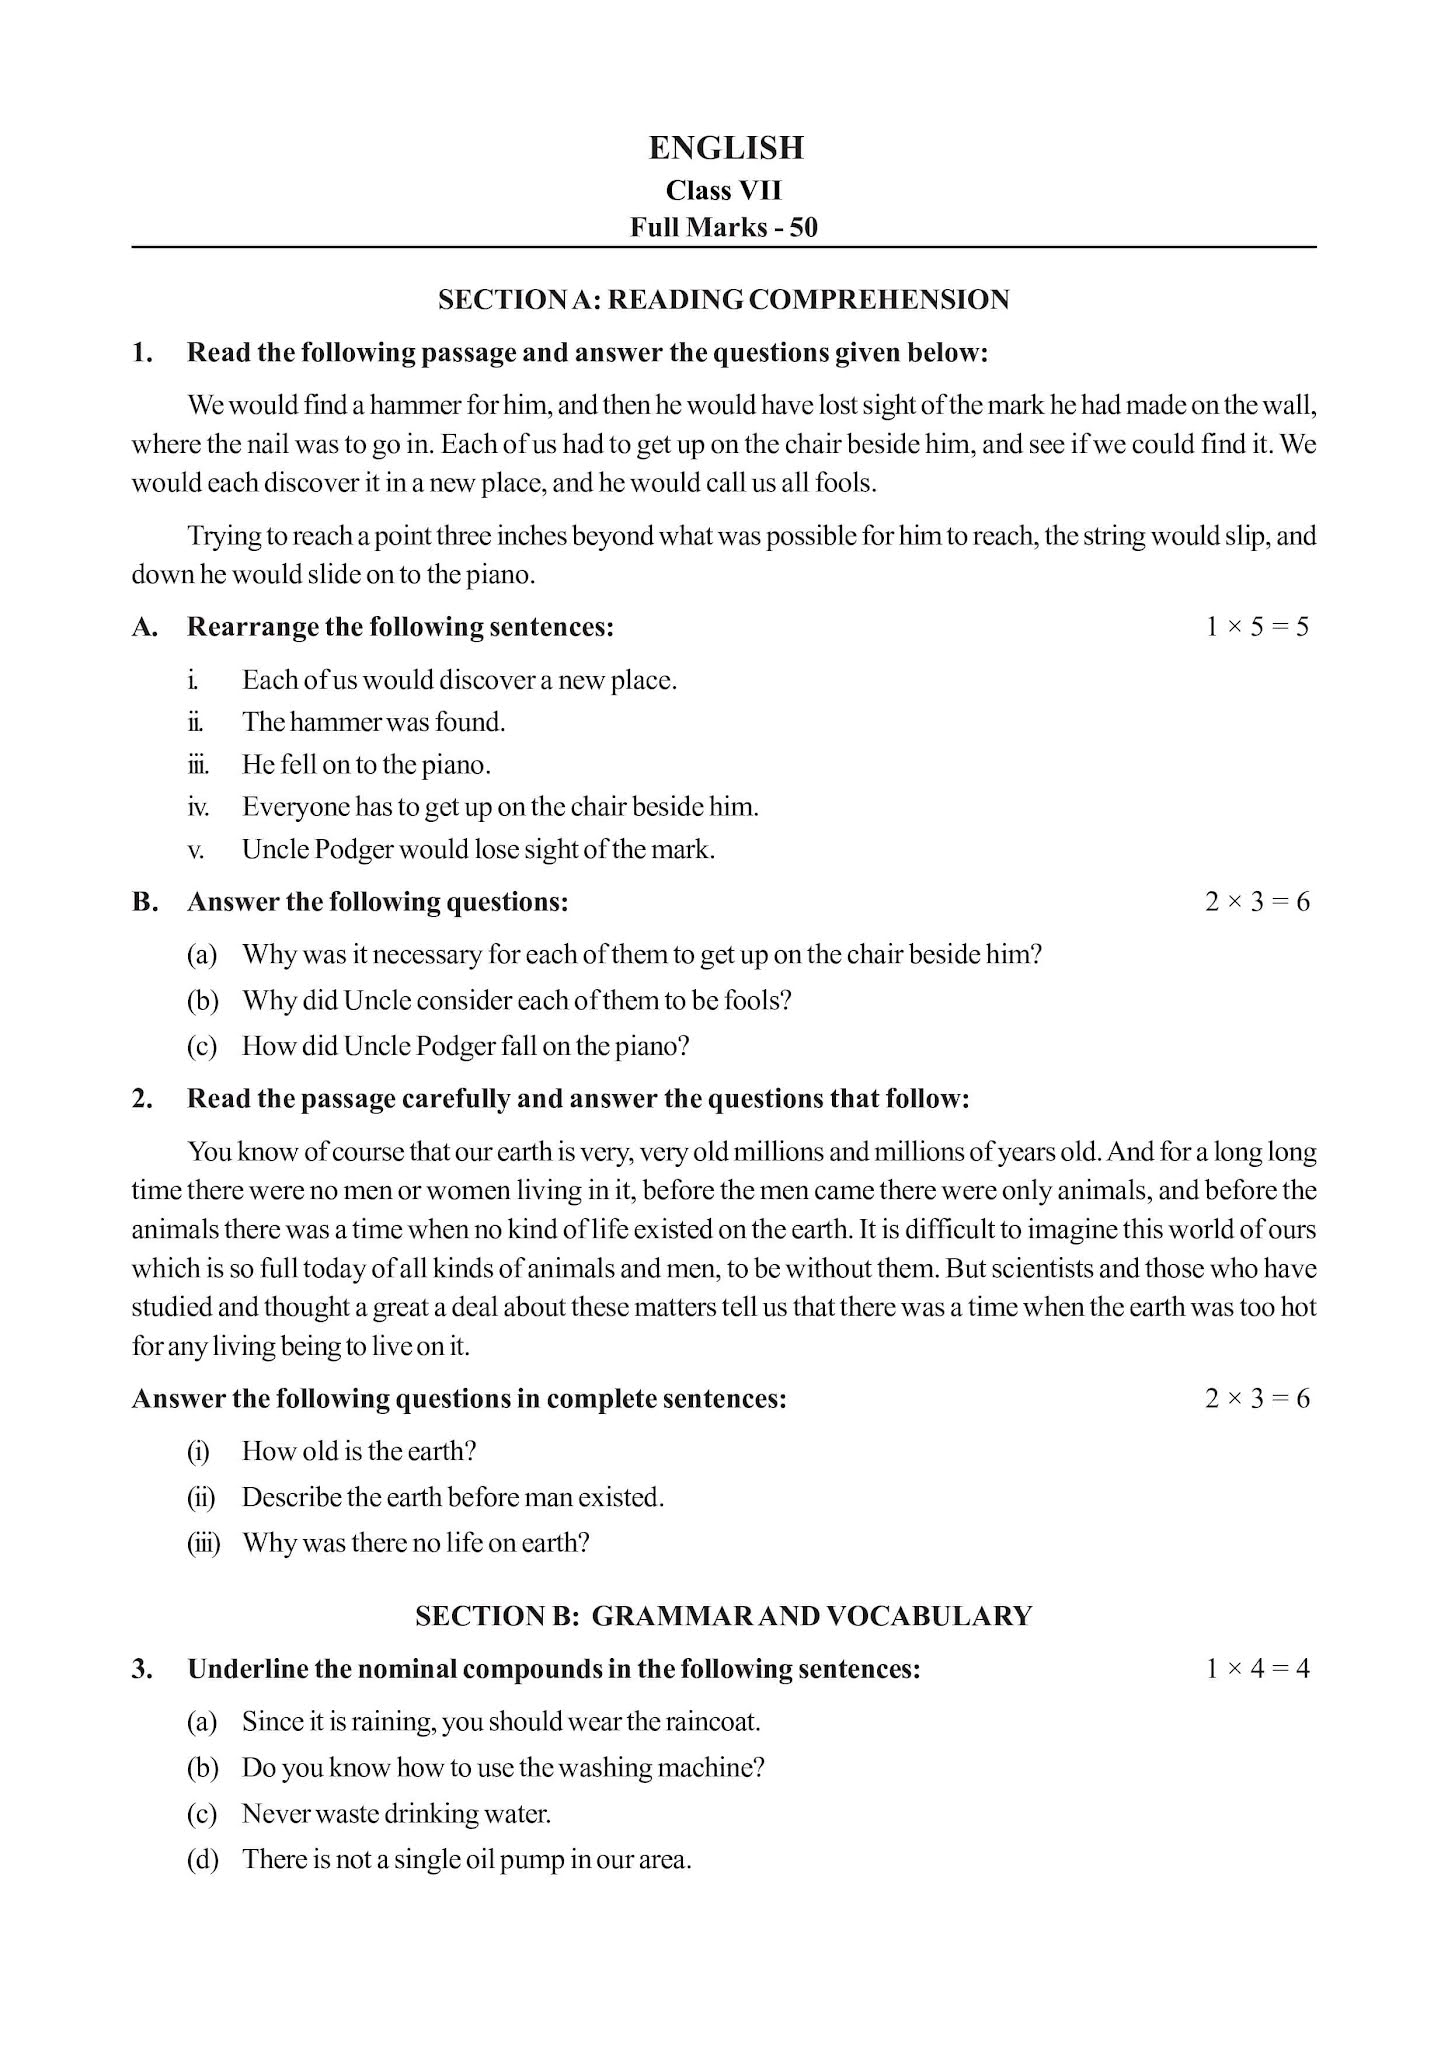 Model Activity Tasks | Second Language (English) | CLASS 7 | Part 8 | 2021 | PDF | Question & Answer